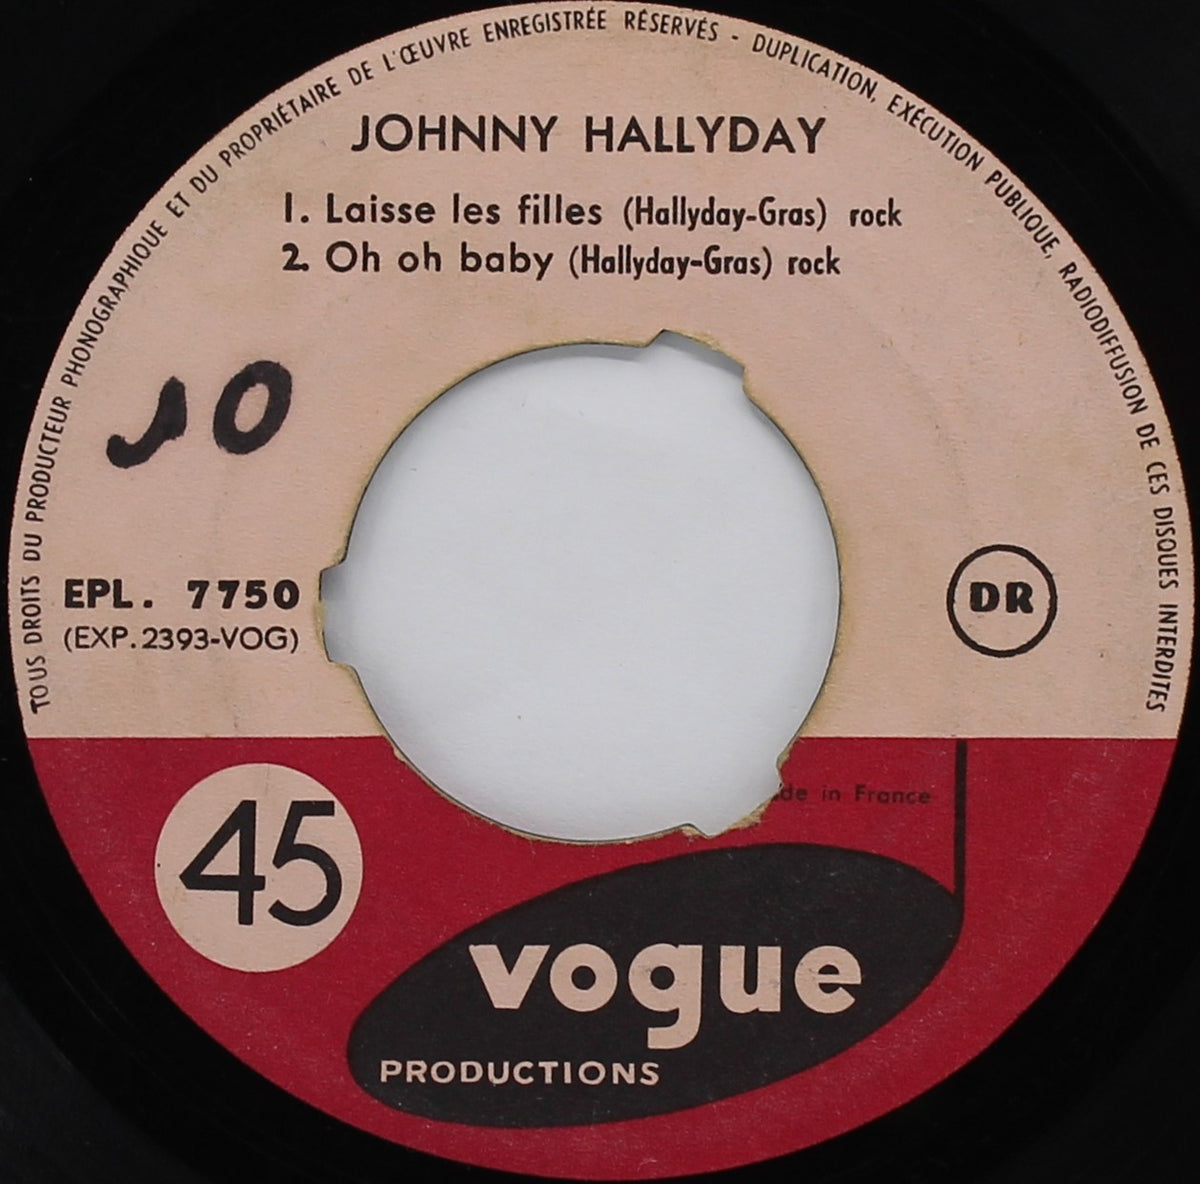 Johnny Hallyday ‎– T&#39;Aimer Follement, Vinyl, 7&quot;, 45 RPM, EP, Saint-Roch Sleeve, France 1960